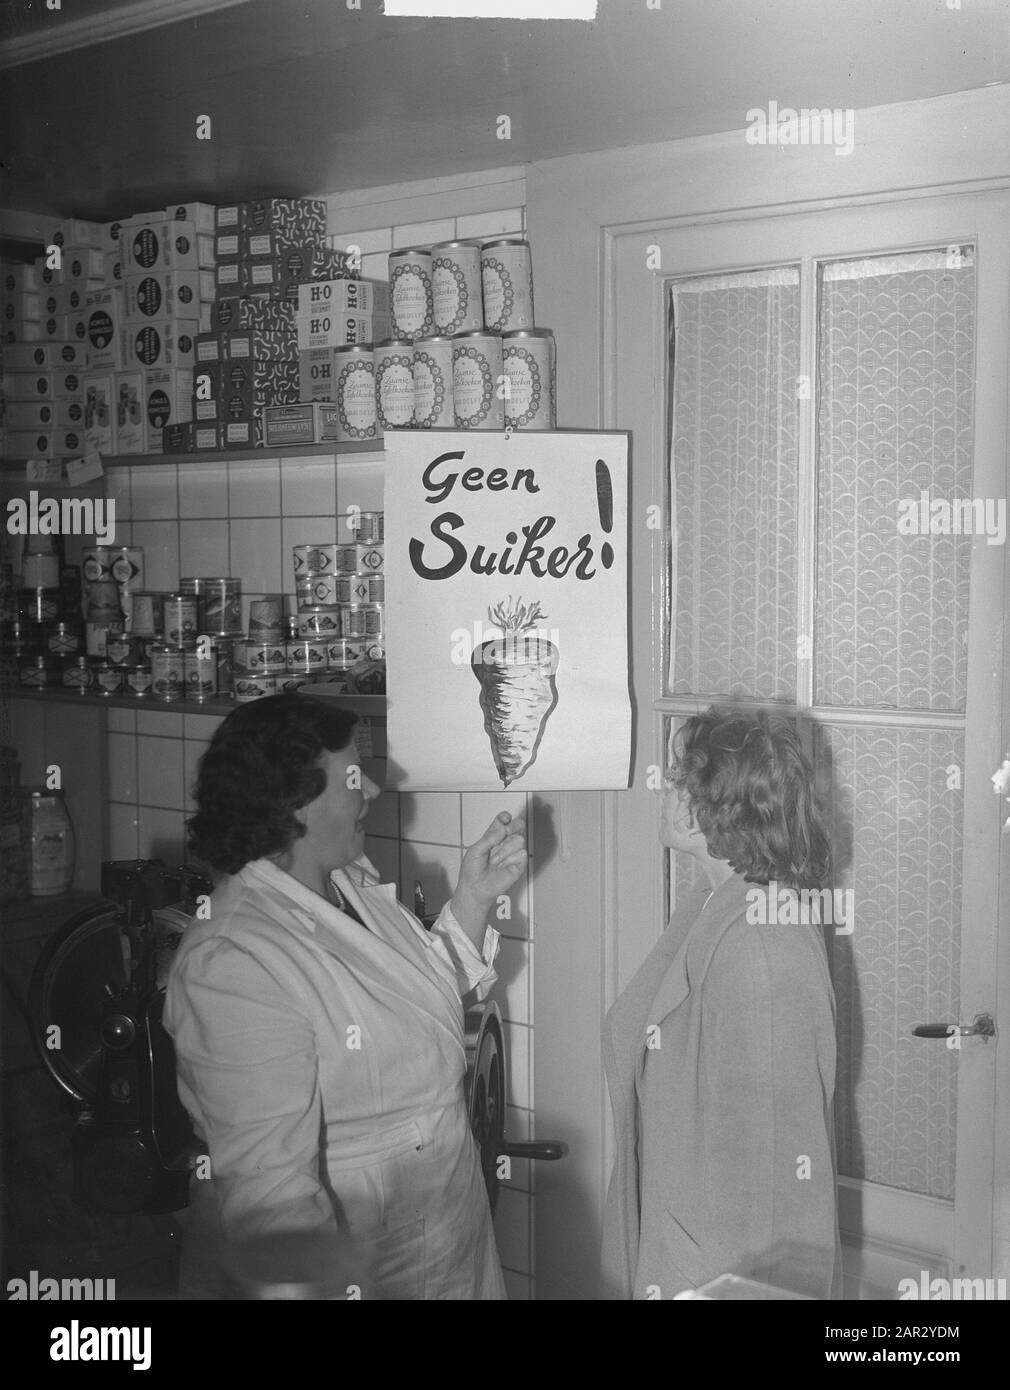 Sugar scarcity Date: September 21, 1950 Stock Photo